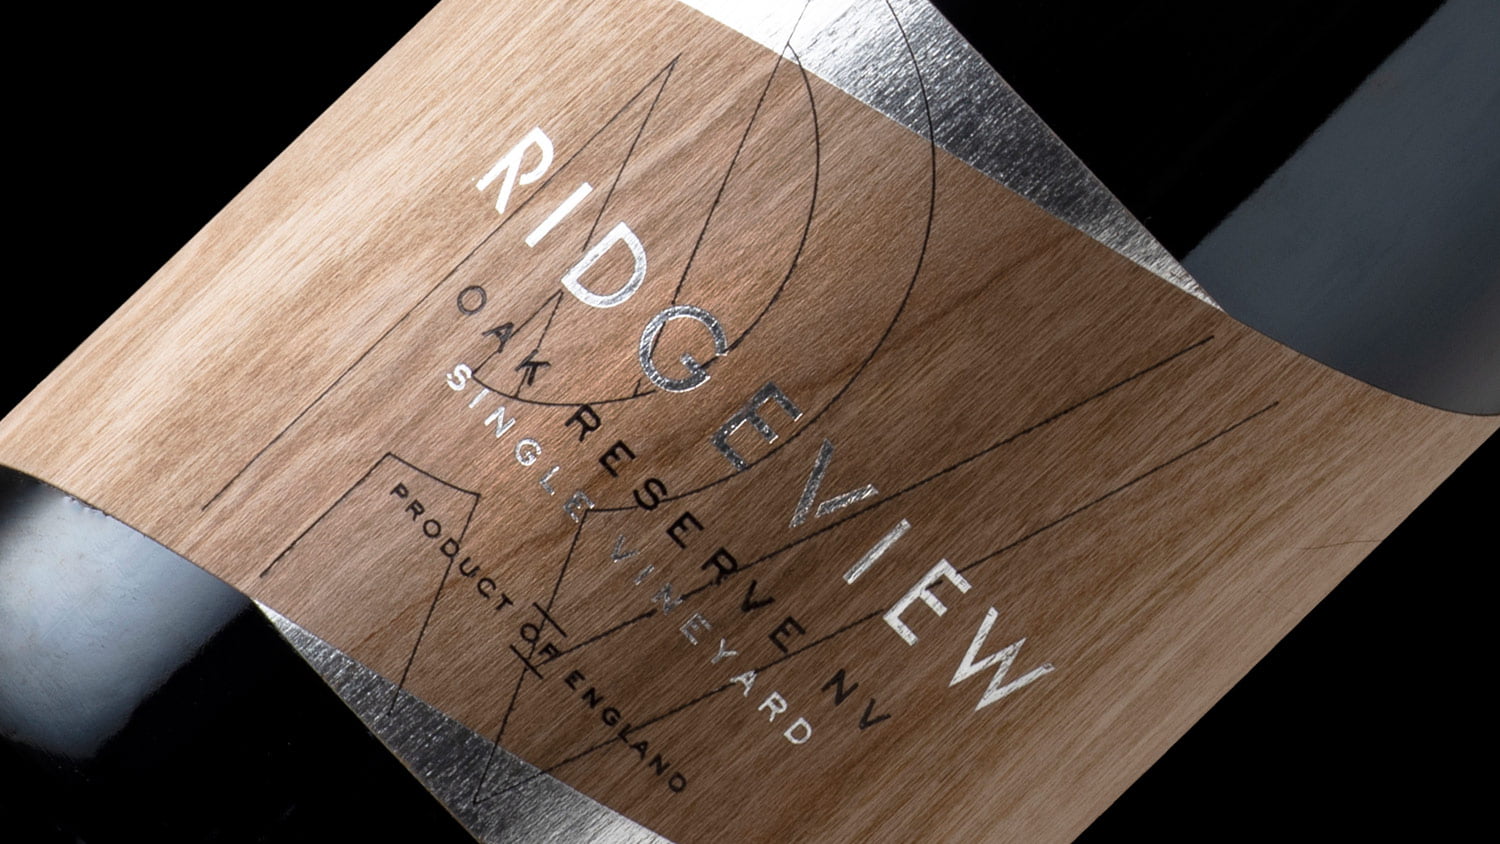 Ridgeview Oak Reserve bottle- winner of The Drinks Business ‘English Sparking Wine Label Design & Packaging Award’